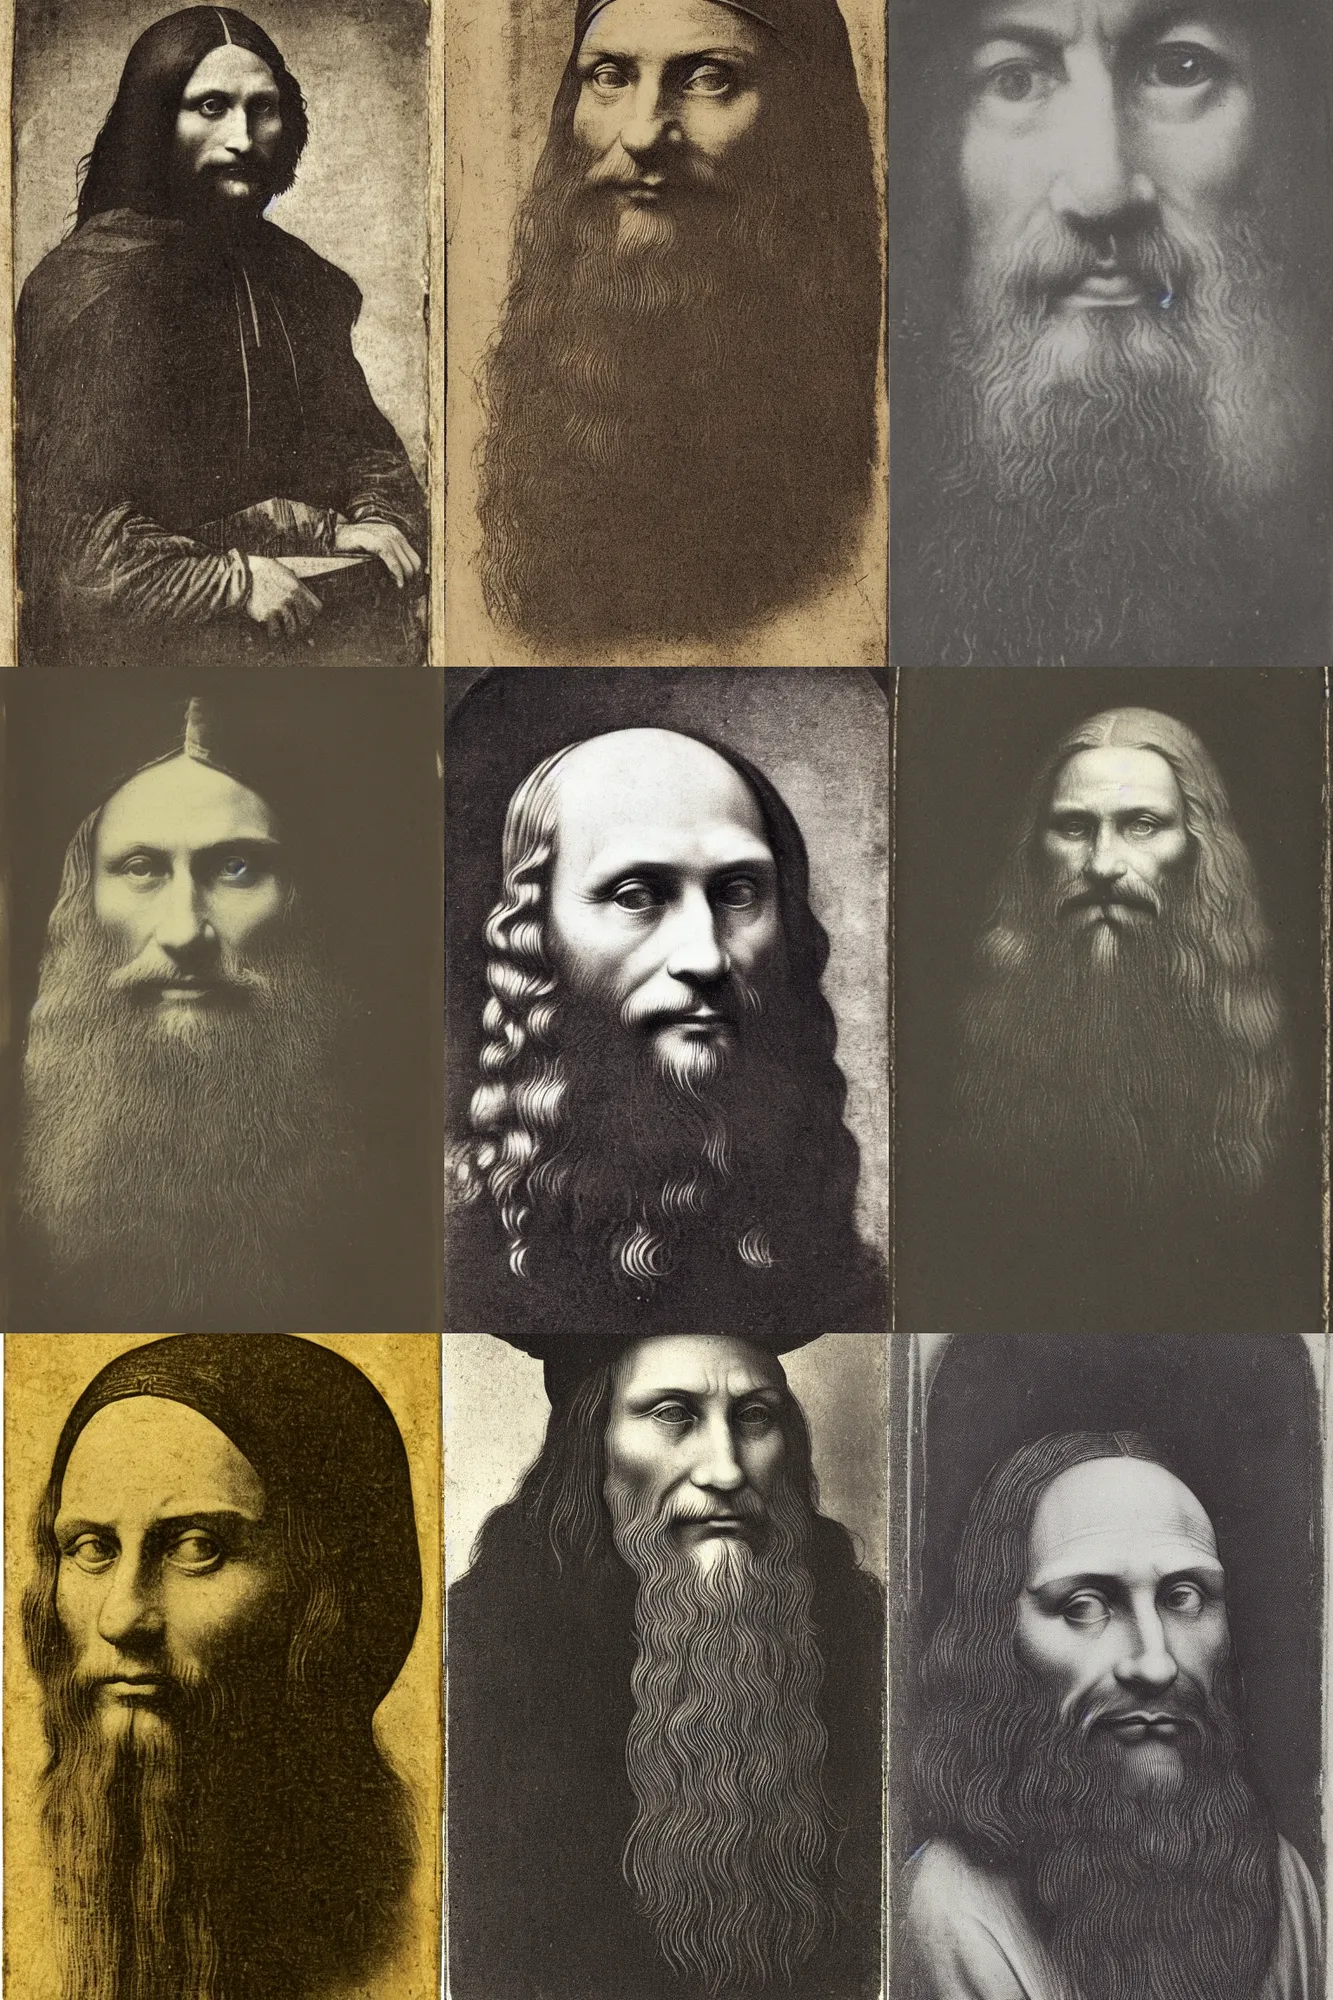 Prompt: an old daguerrotype portrait of Leonardo da Vinci